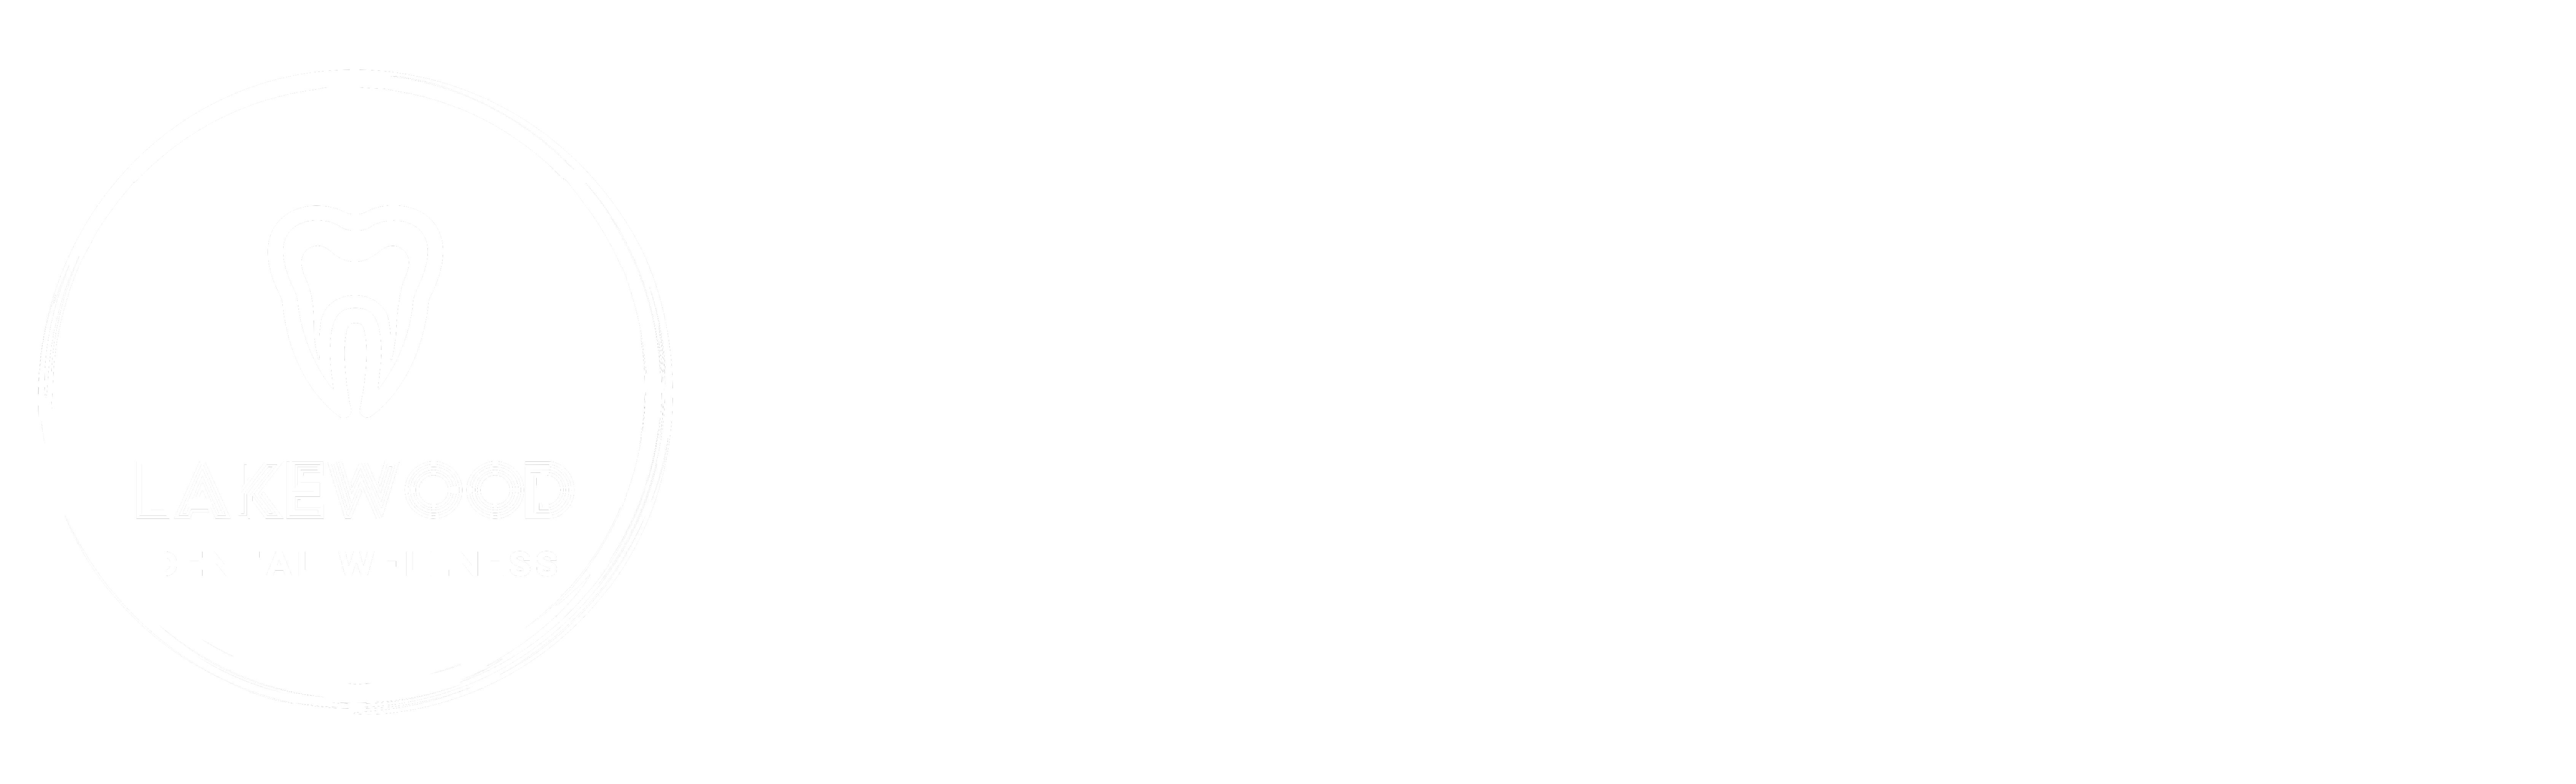 Lakewood Dental and Wellness